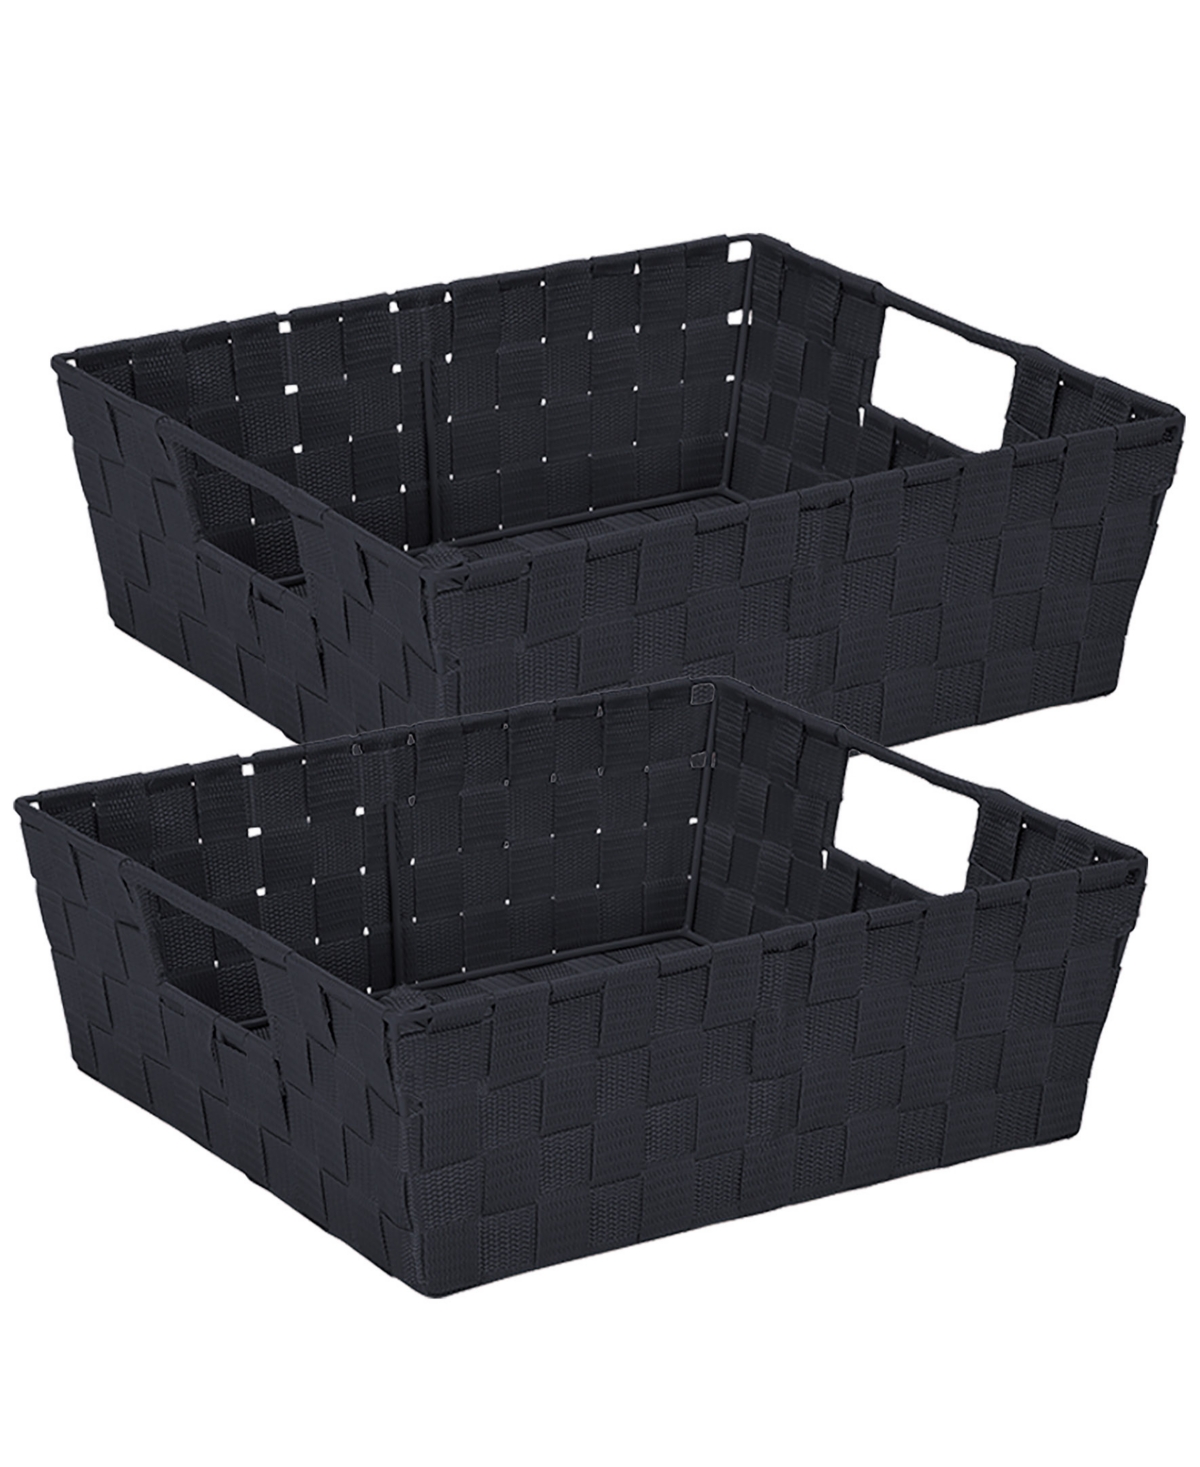 2 Pack Storage Shelf Tote - Black